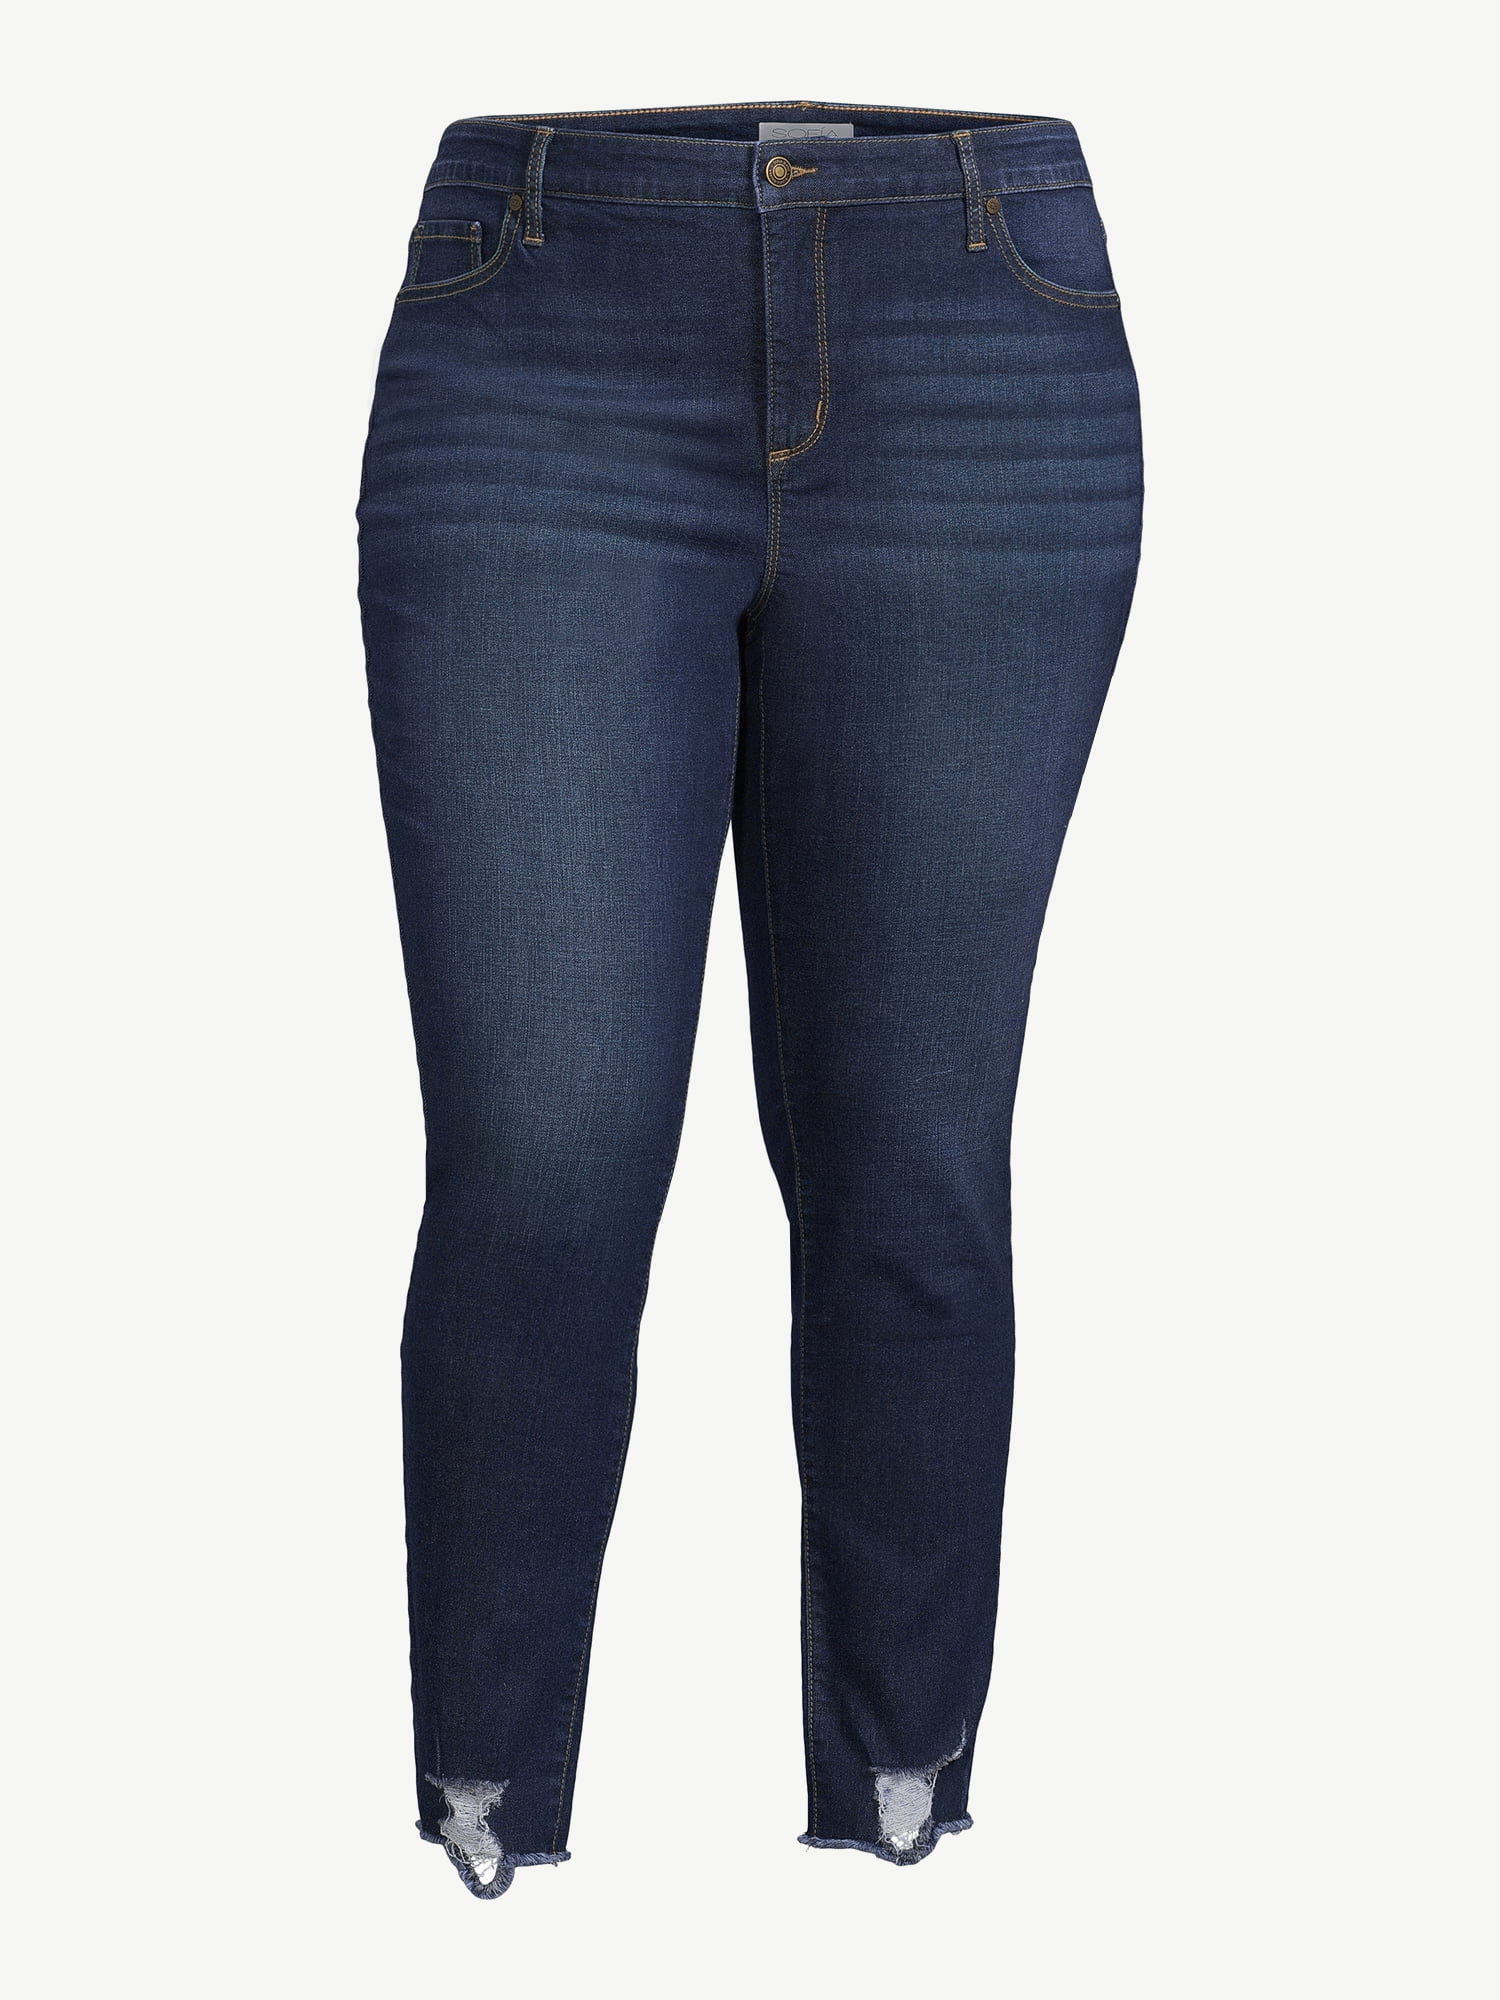 KISSPLUS Plus Size Baggy Jeans for Women High Waist Loose Women Jeans Curvy  Stretchy Black and Blue Denim Pants for Women, Light Blue, 14 Plus Petite  price in Saudi Arabia